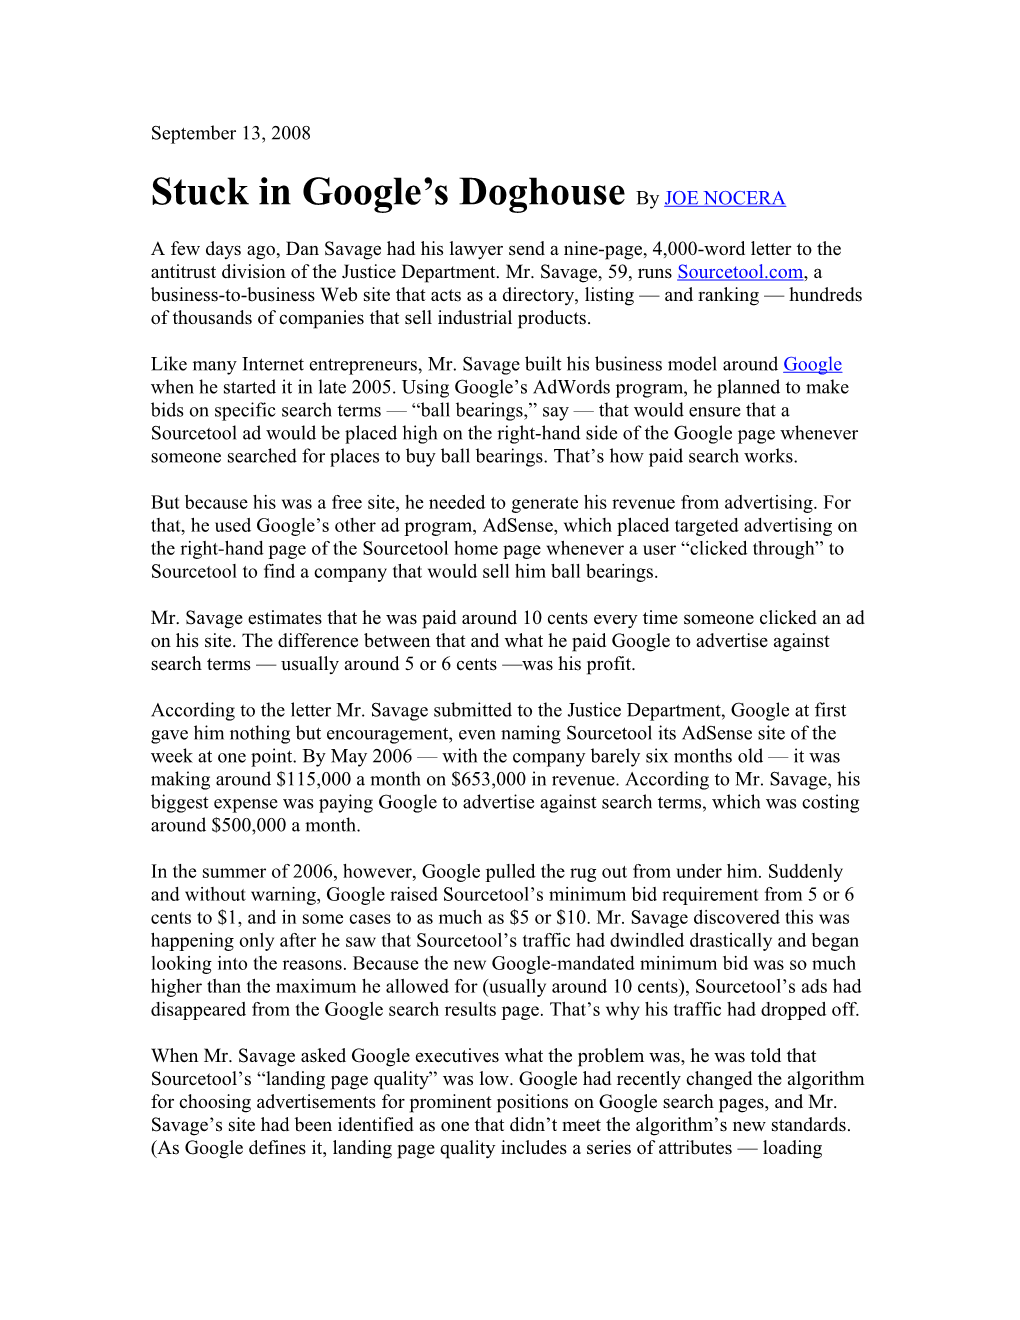 Stuck in Google S Doghouse by JOE NOCERA